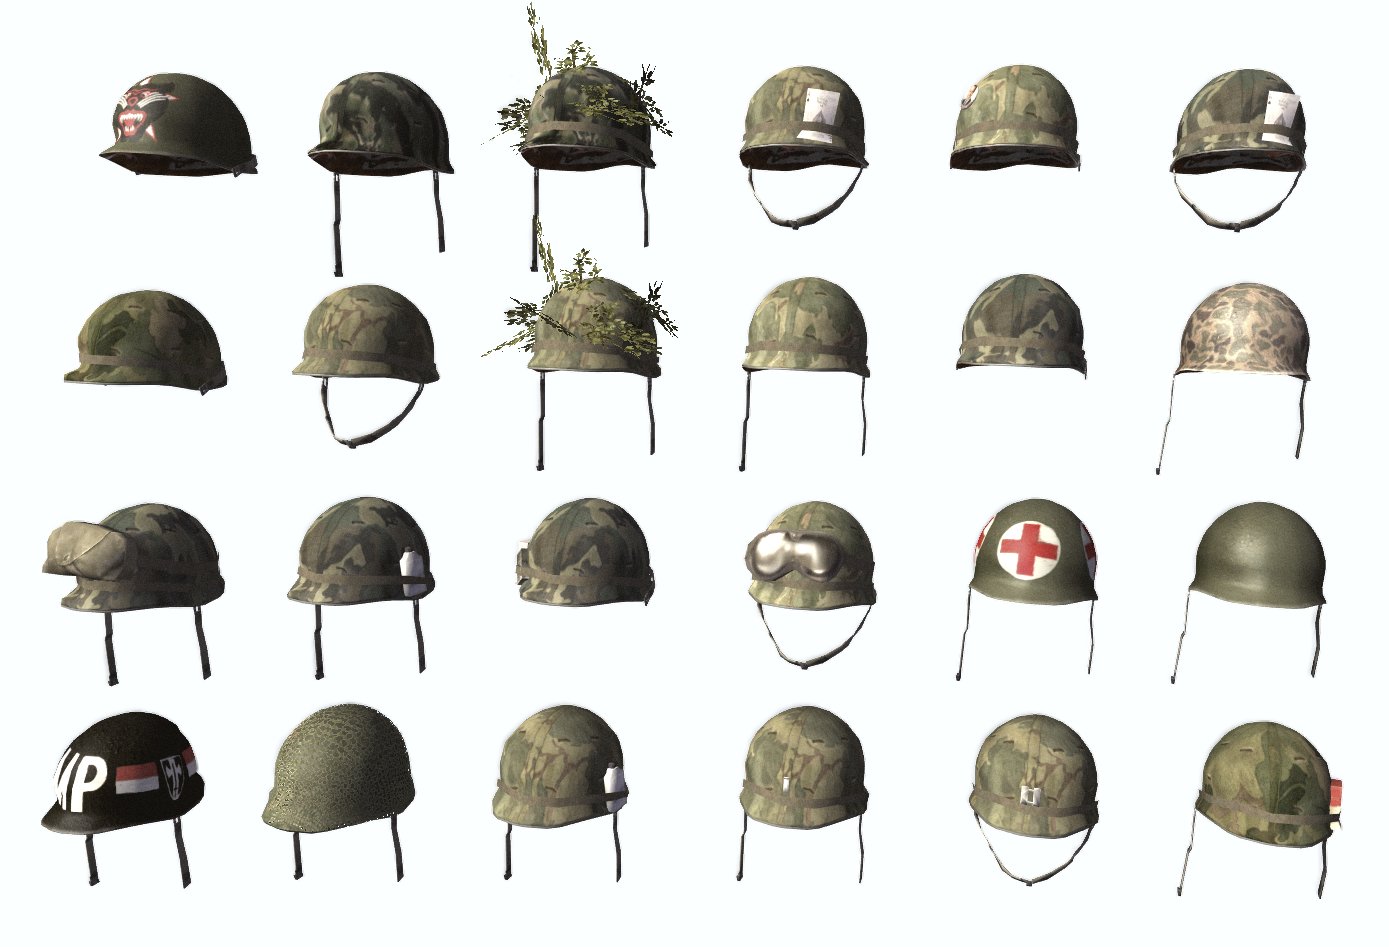 M1 helmets